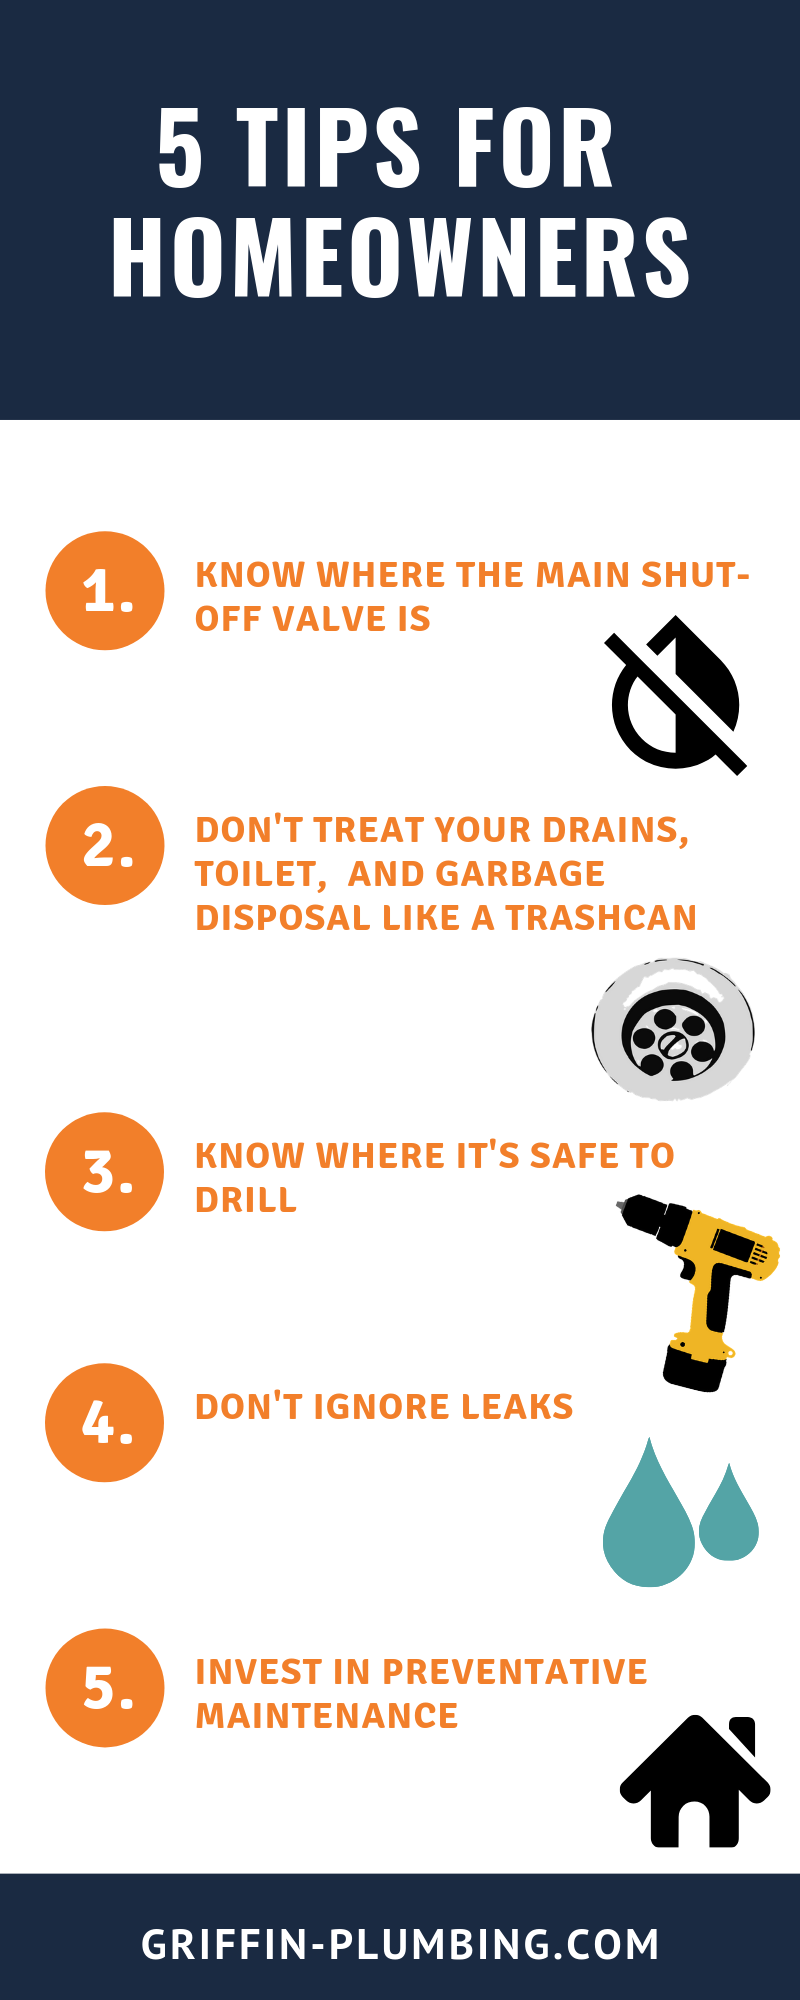 Plumbing Tips - Toilet Leaks